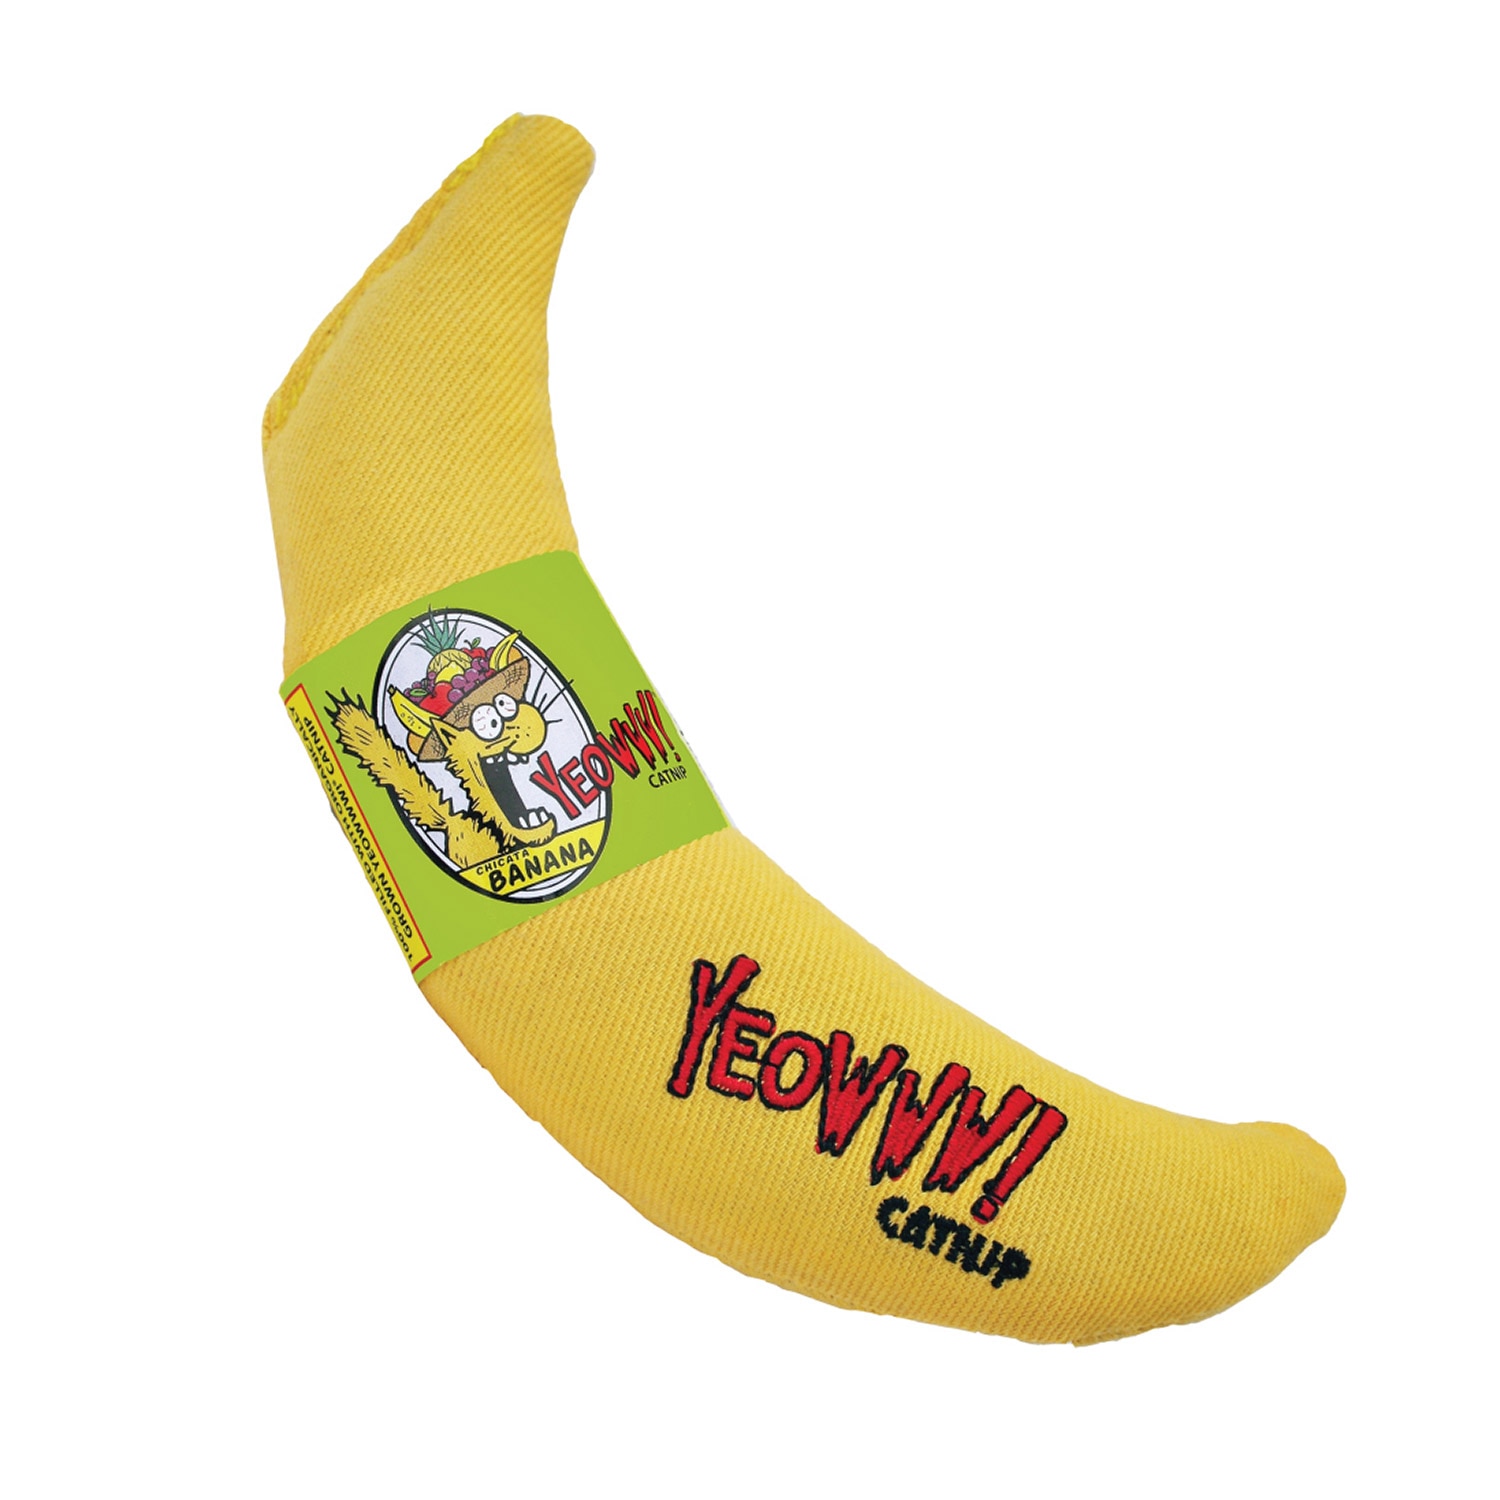 Yeowww Catnip Banana Cat Toy 